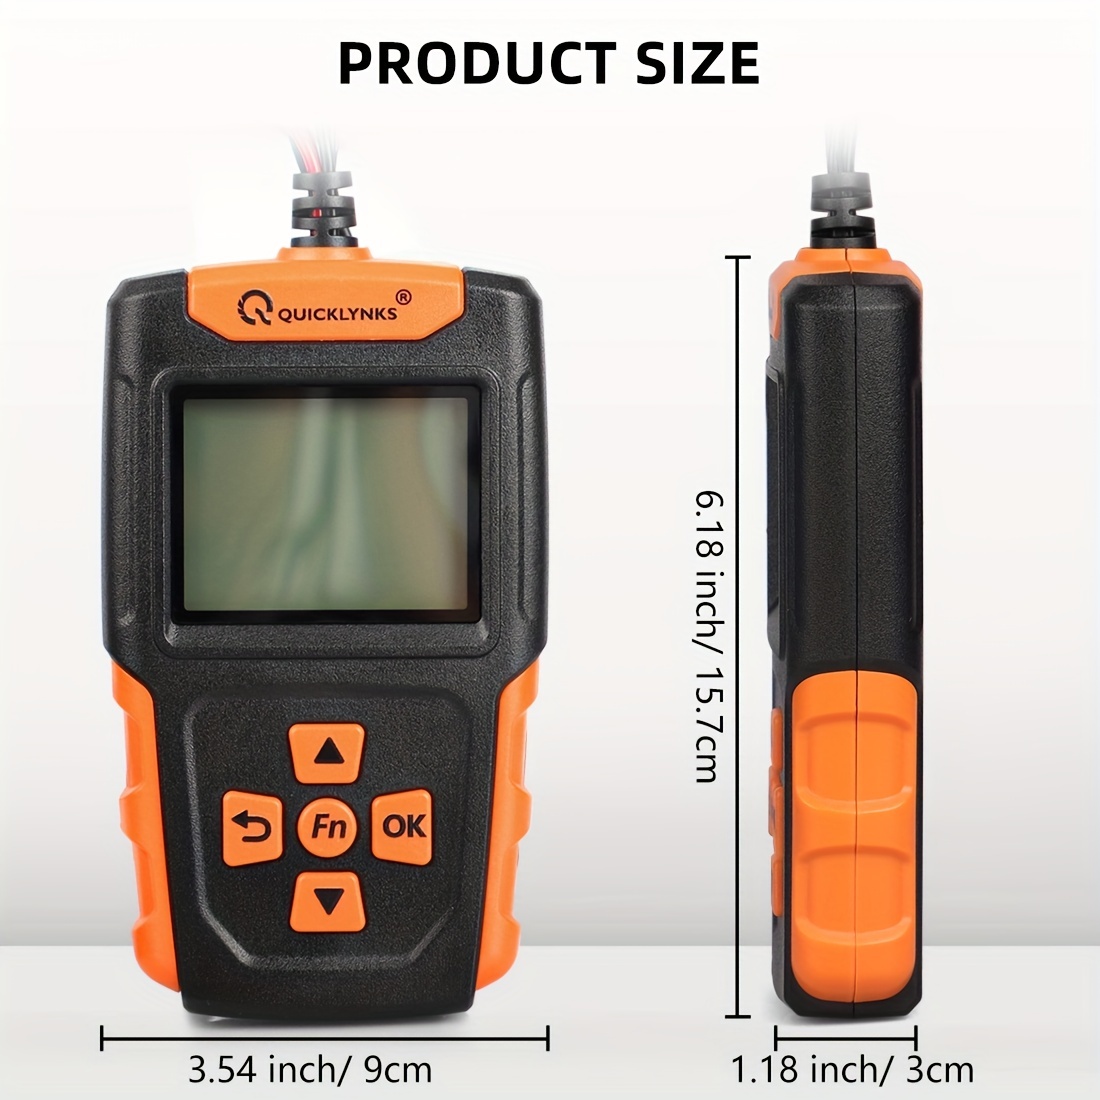 Kaufe 12V/24V Auto Batterie Tester LCD Digital Batterie Analysator Auto  Ladung Diagnose Tool SOH SOC CCA IR